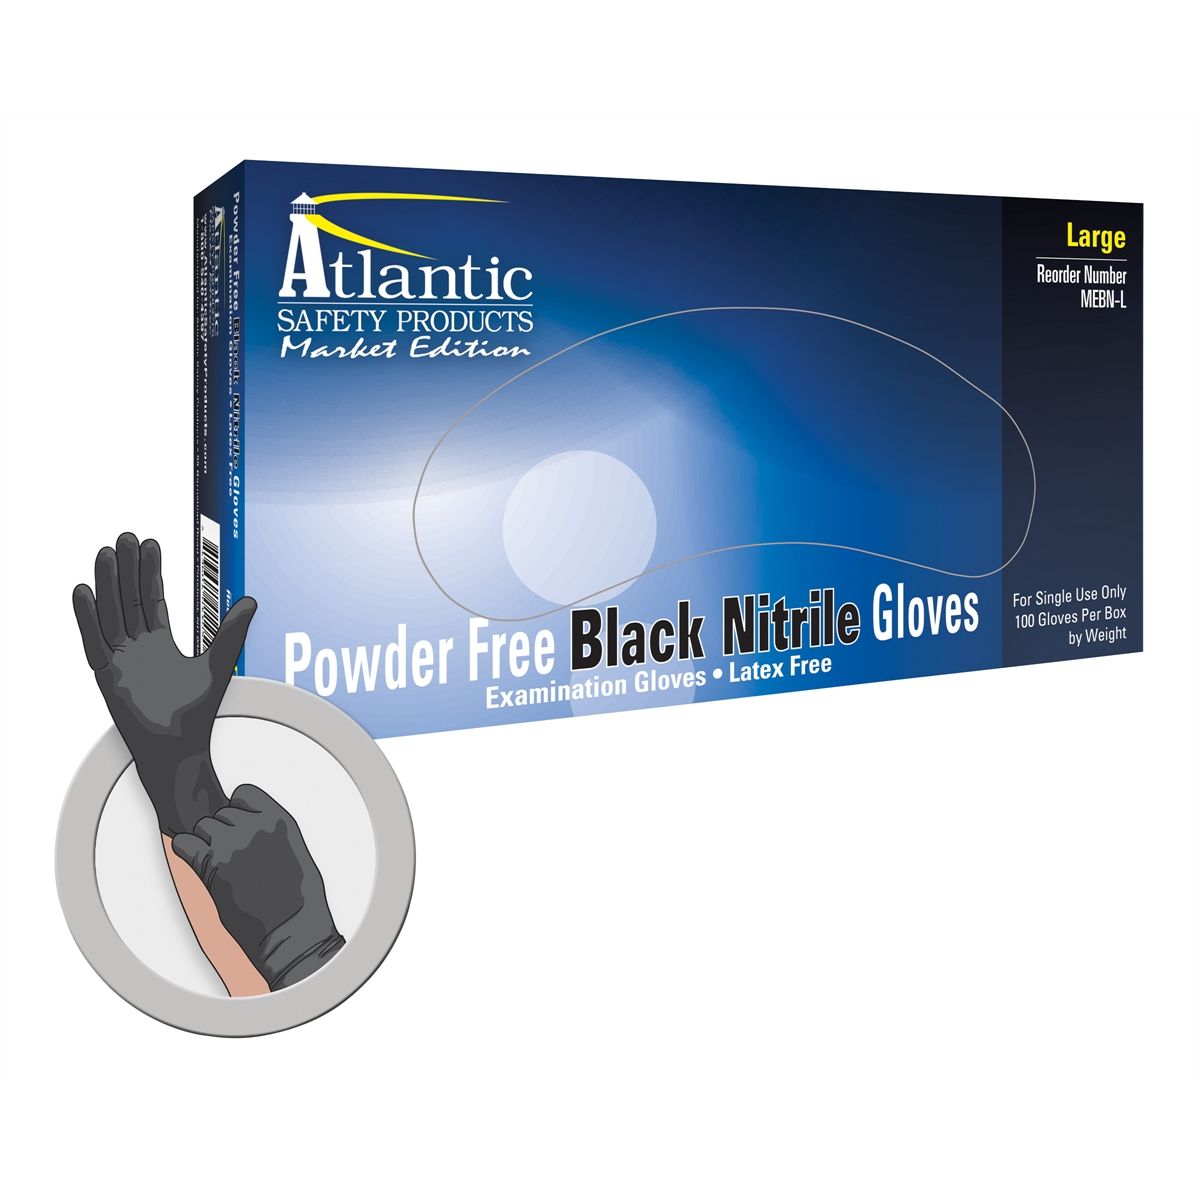 Market Edition Black Powder Free Nitrile Gloves Medium